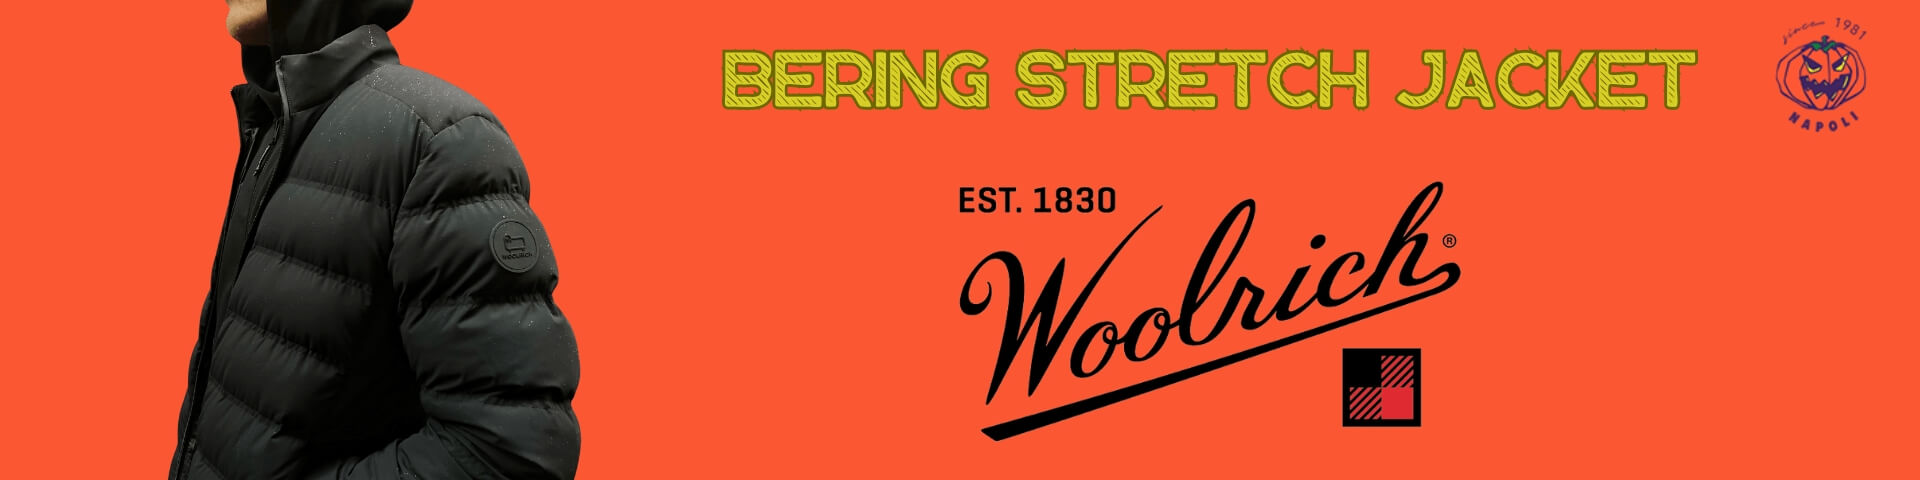 WOOLRICH-BERING-STRETCH